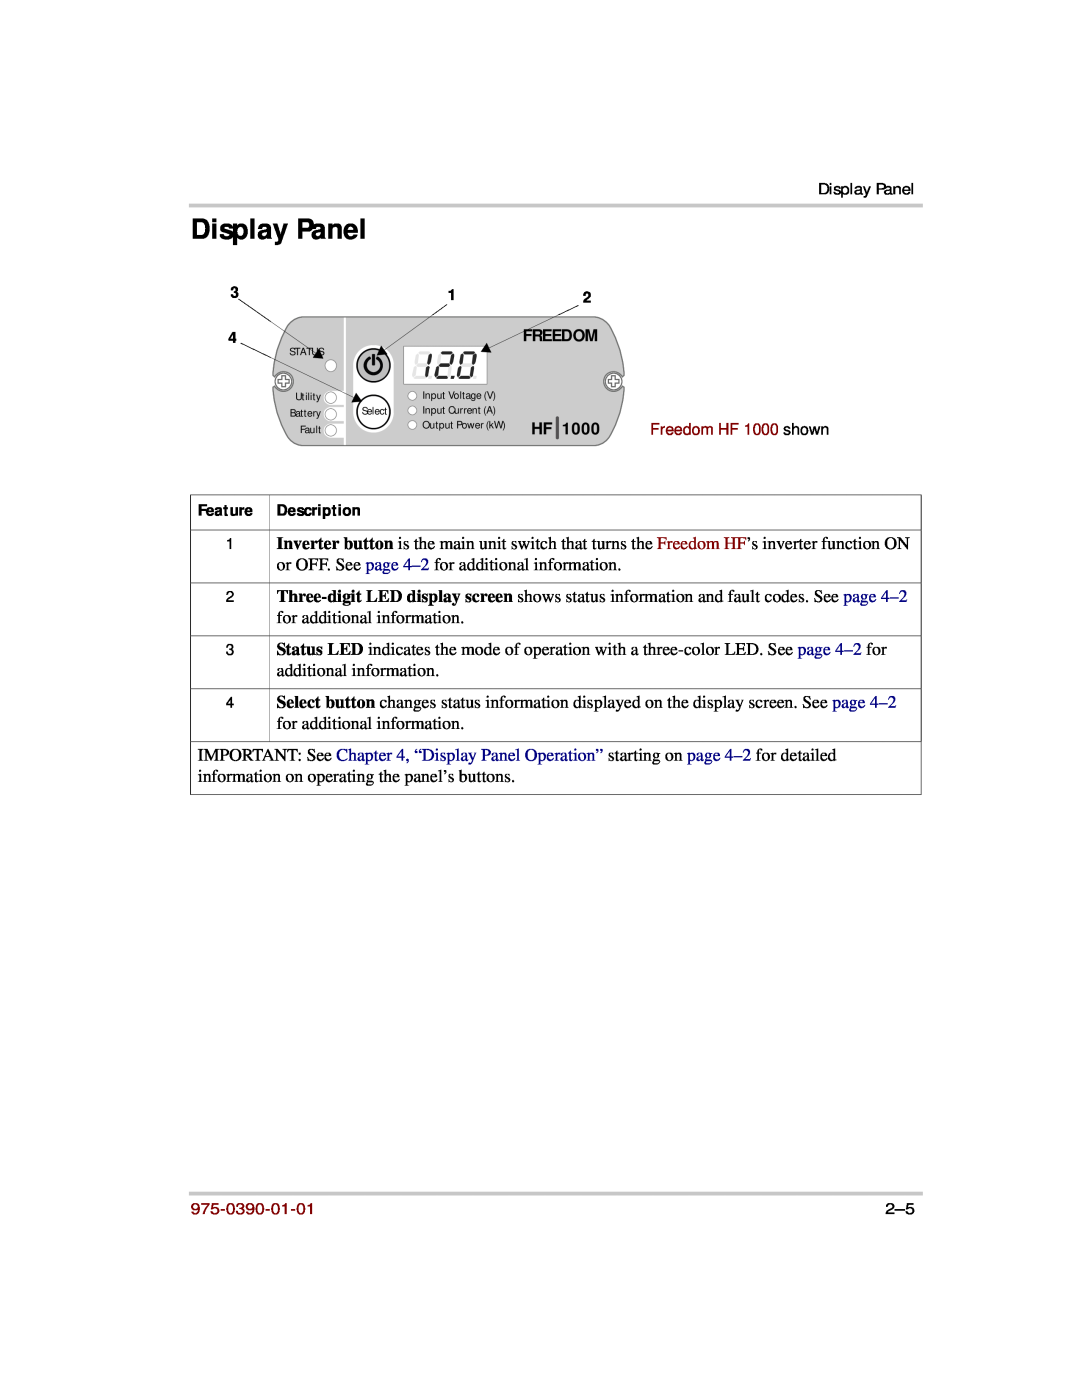 Xantrex Technology HF 1800, HF 1000 manual Display Panel, Feature Description, 975-0390-01-01 